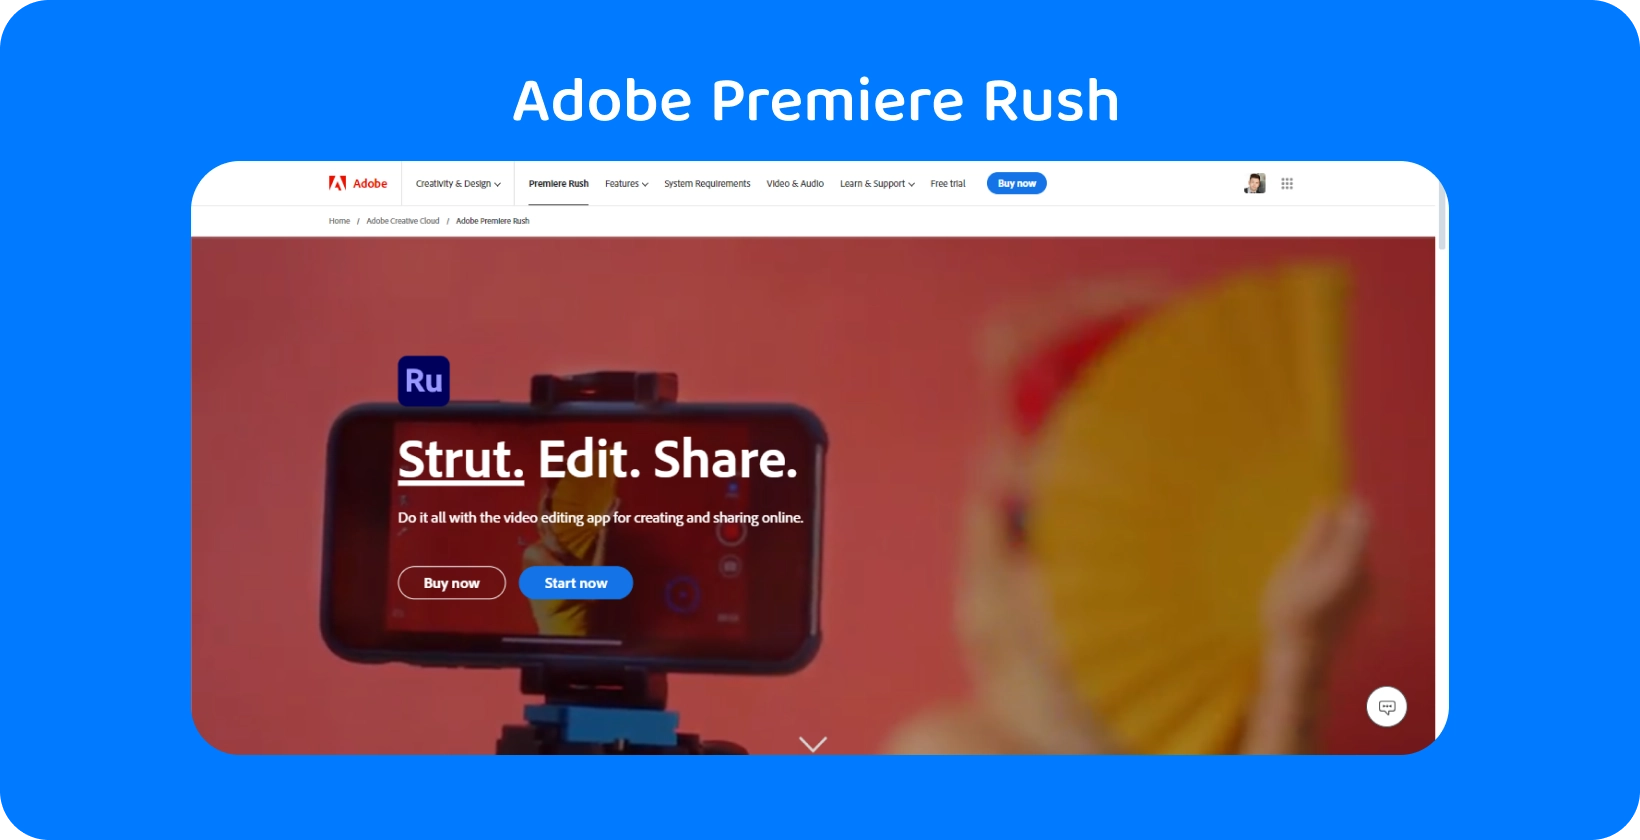 Adobe Premiere Rush を三脚に取り付けたスマートフォンで、「Strut. Edit. Share.」というスローガンを掲げてビデオ編集を行います。